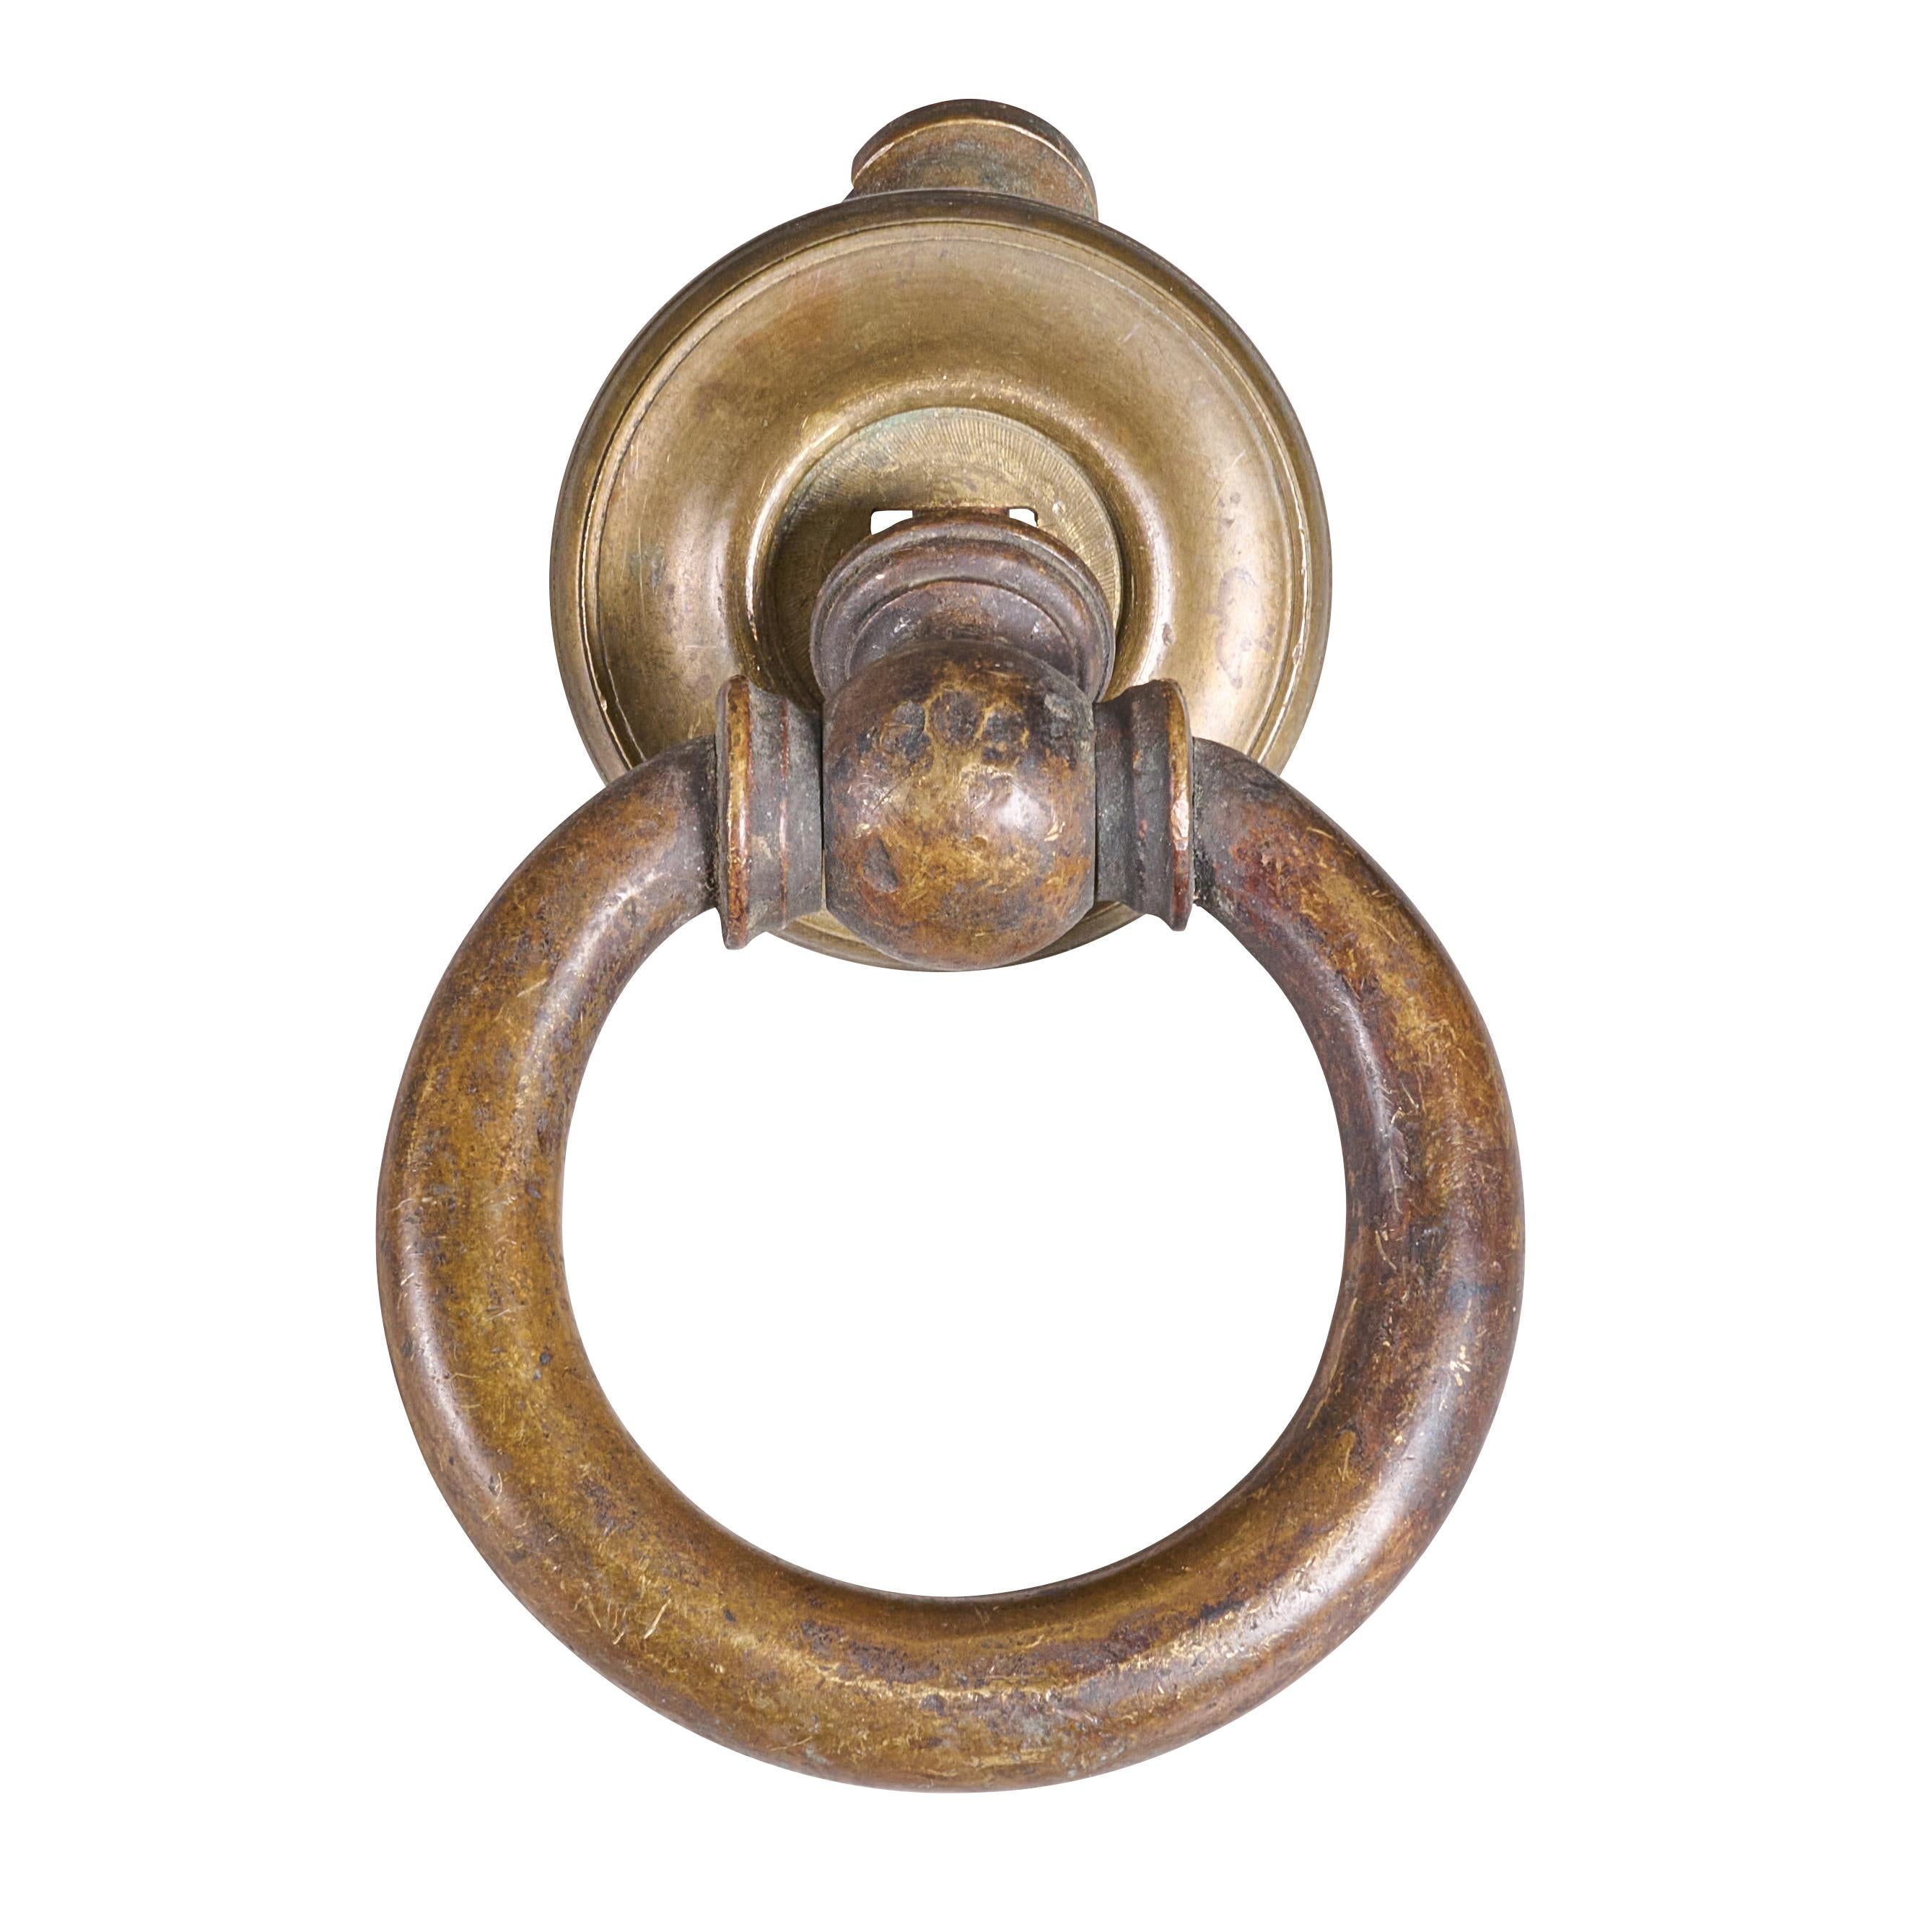 Heavy duty cast bronze door knocker. Great quality, warm patina.

